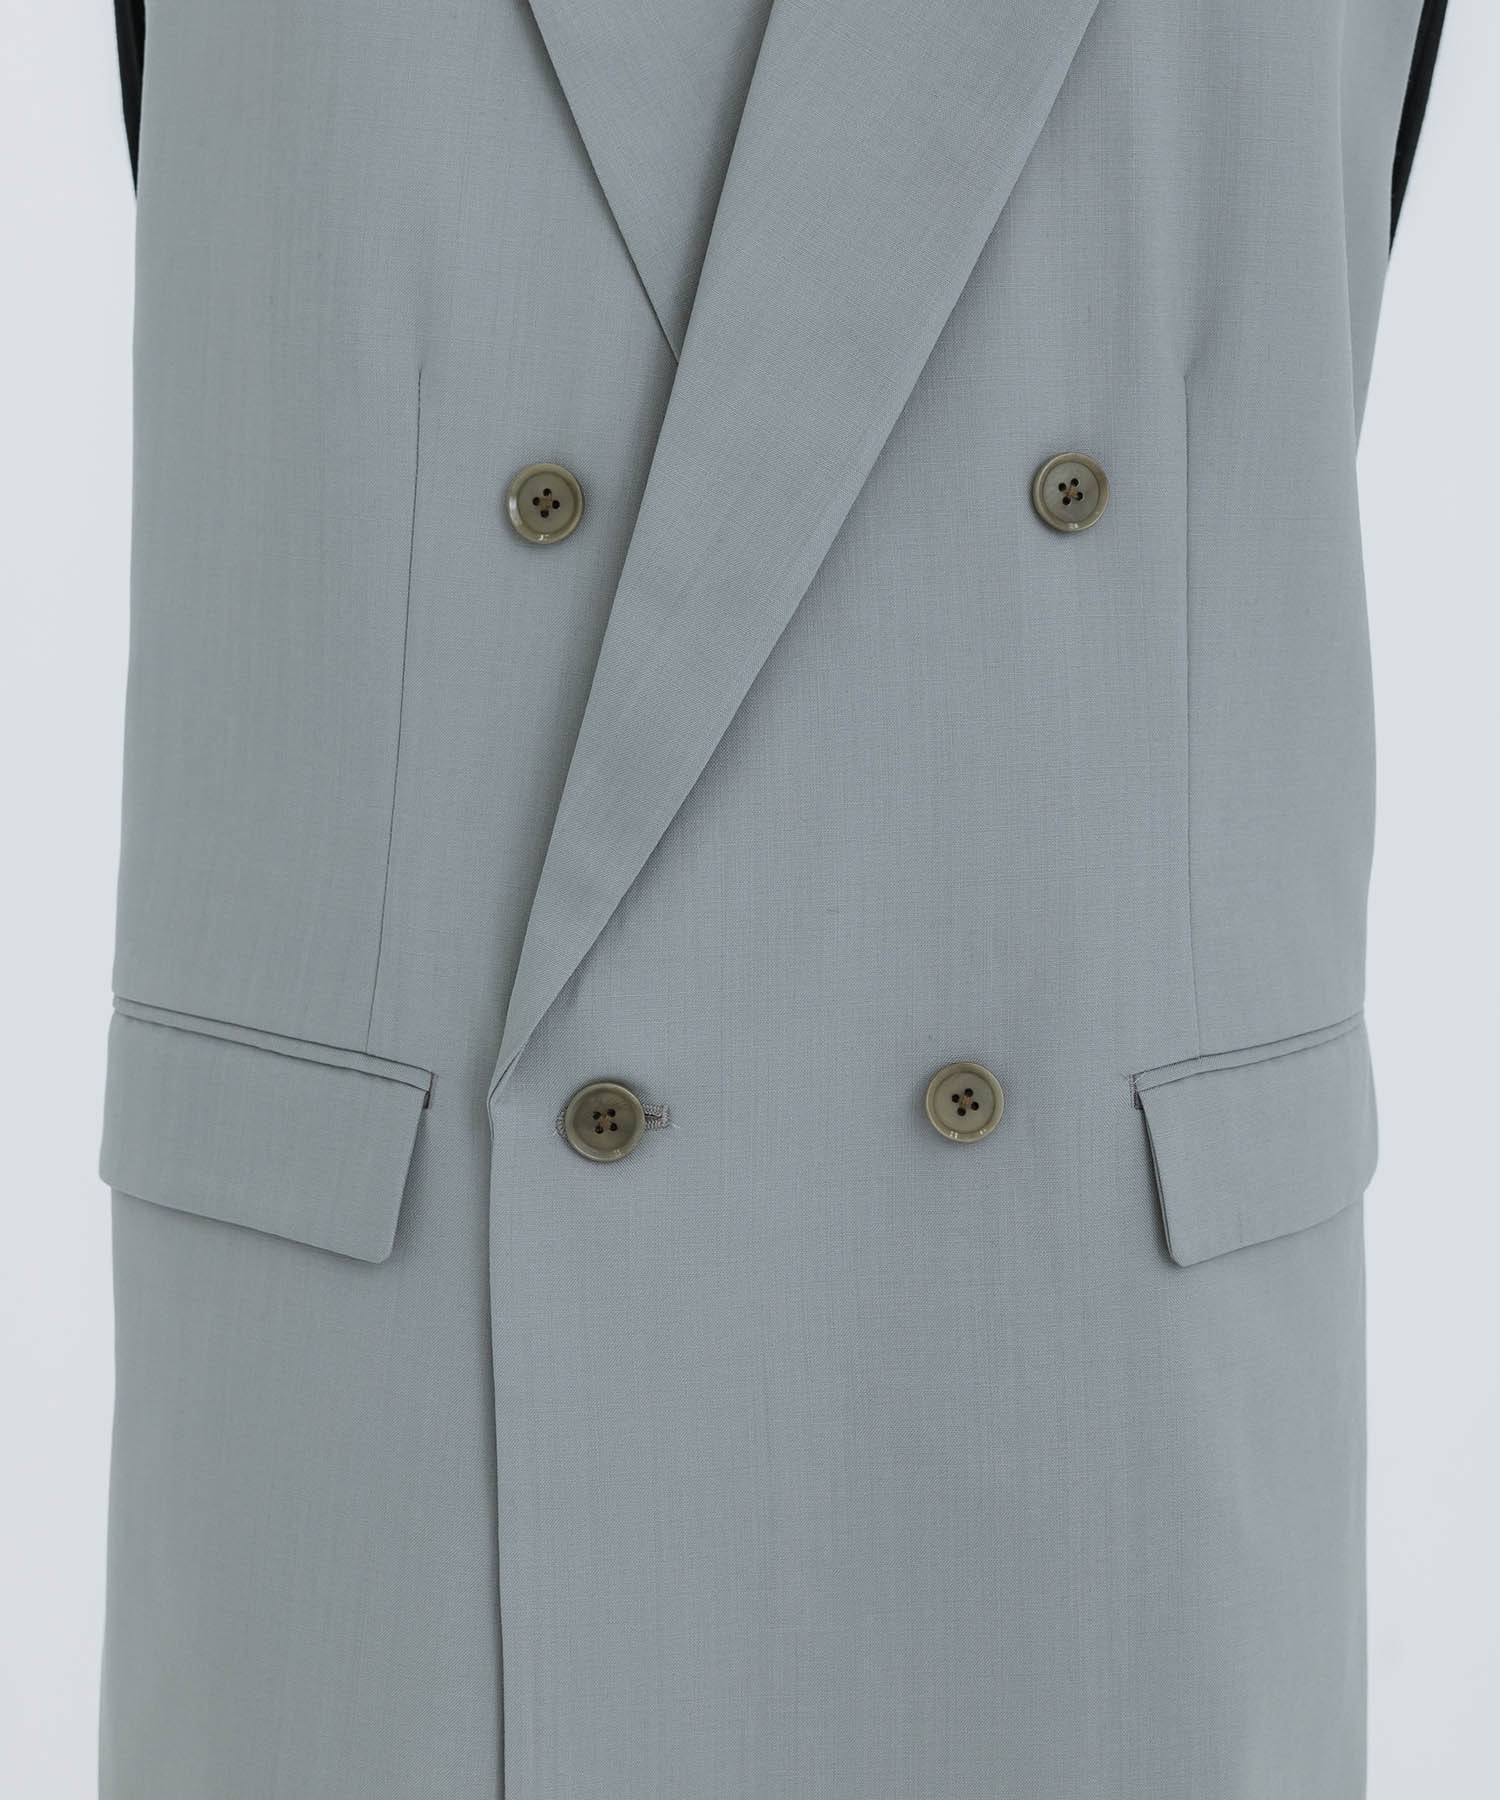 Wool tropical double breast sleeveless jacket 08sircus